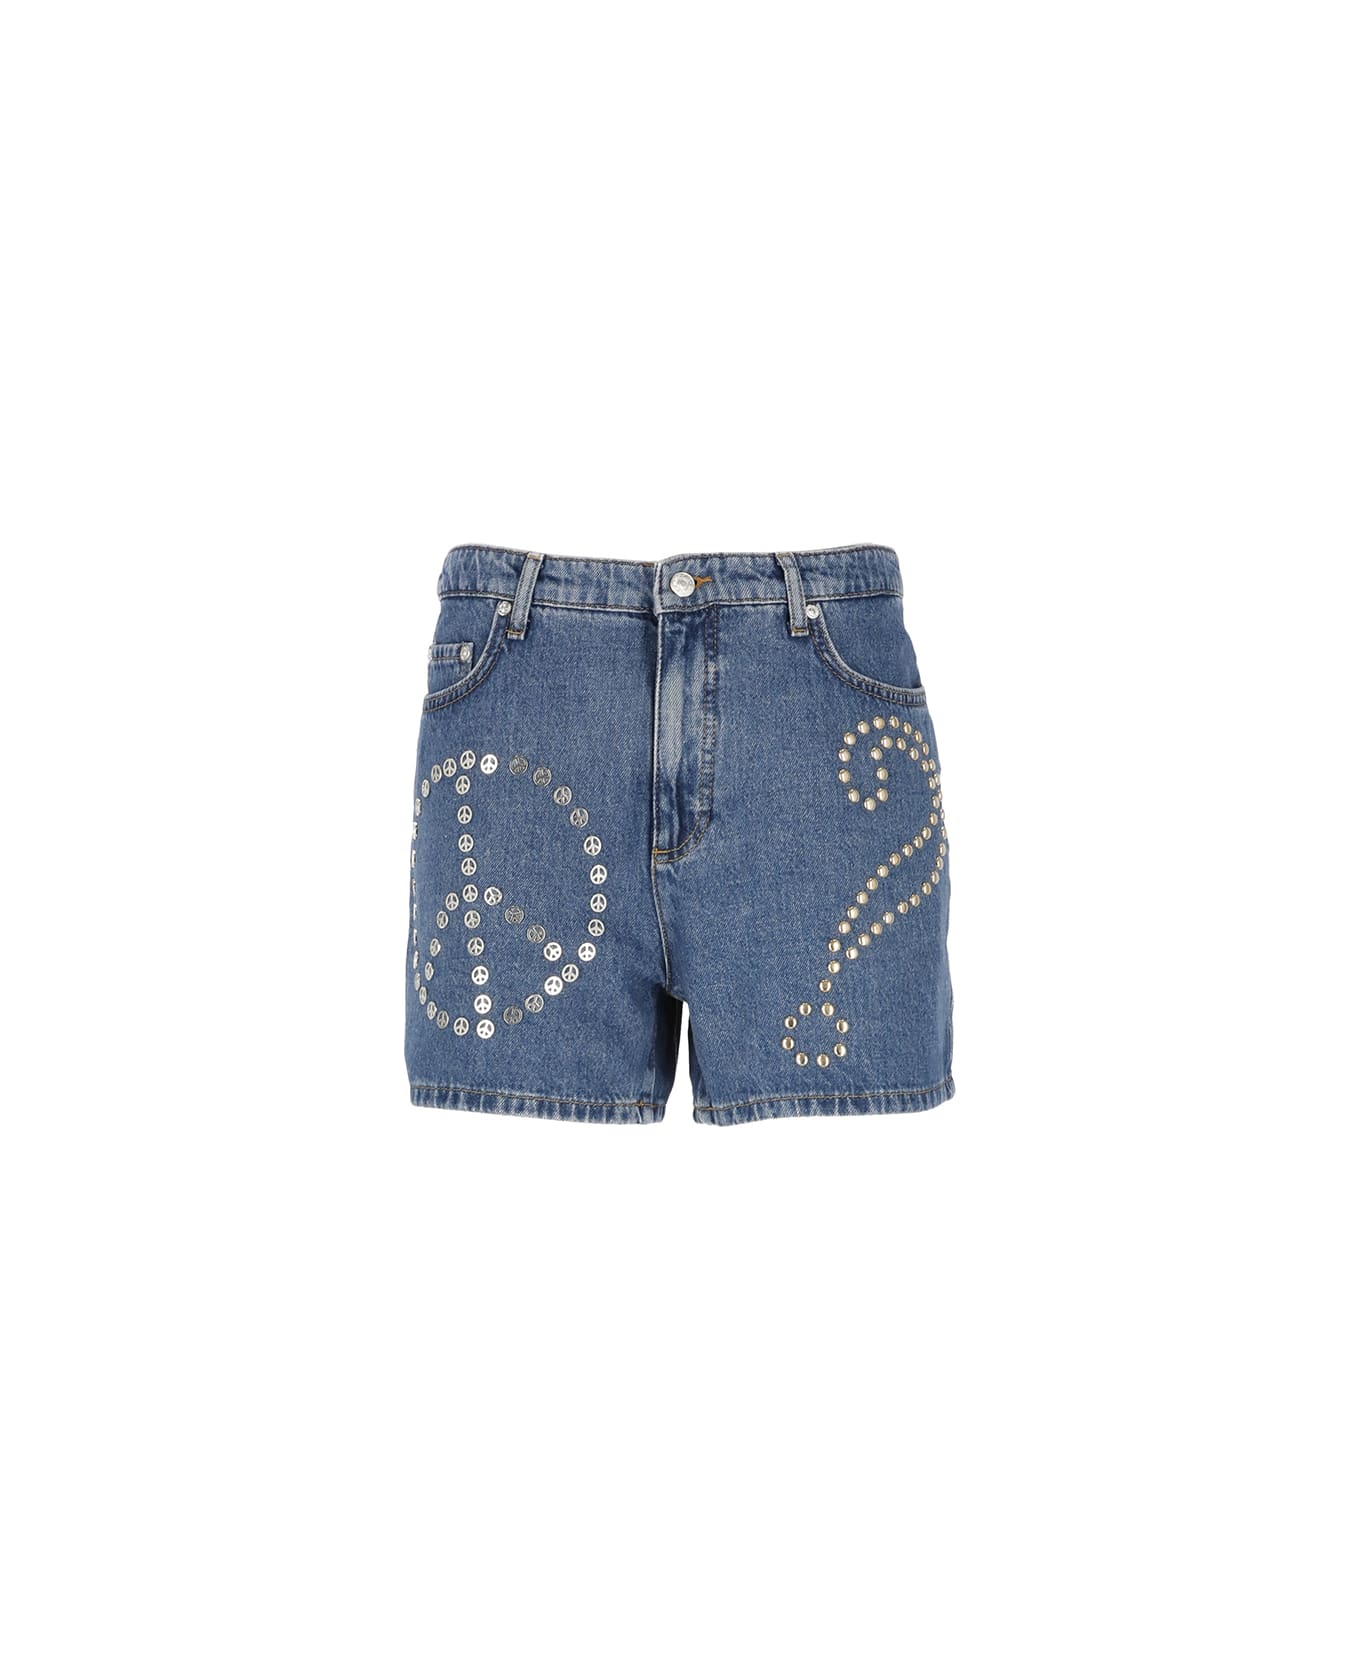 M05CH1N0 Jeans Denim Bermuda Shorts - Blue